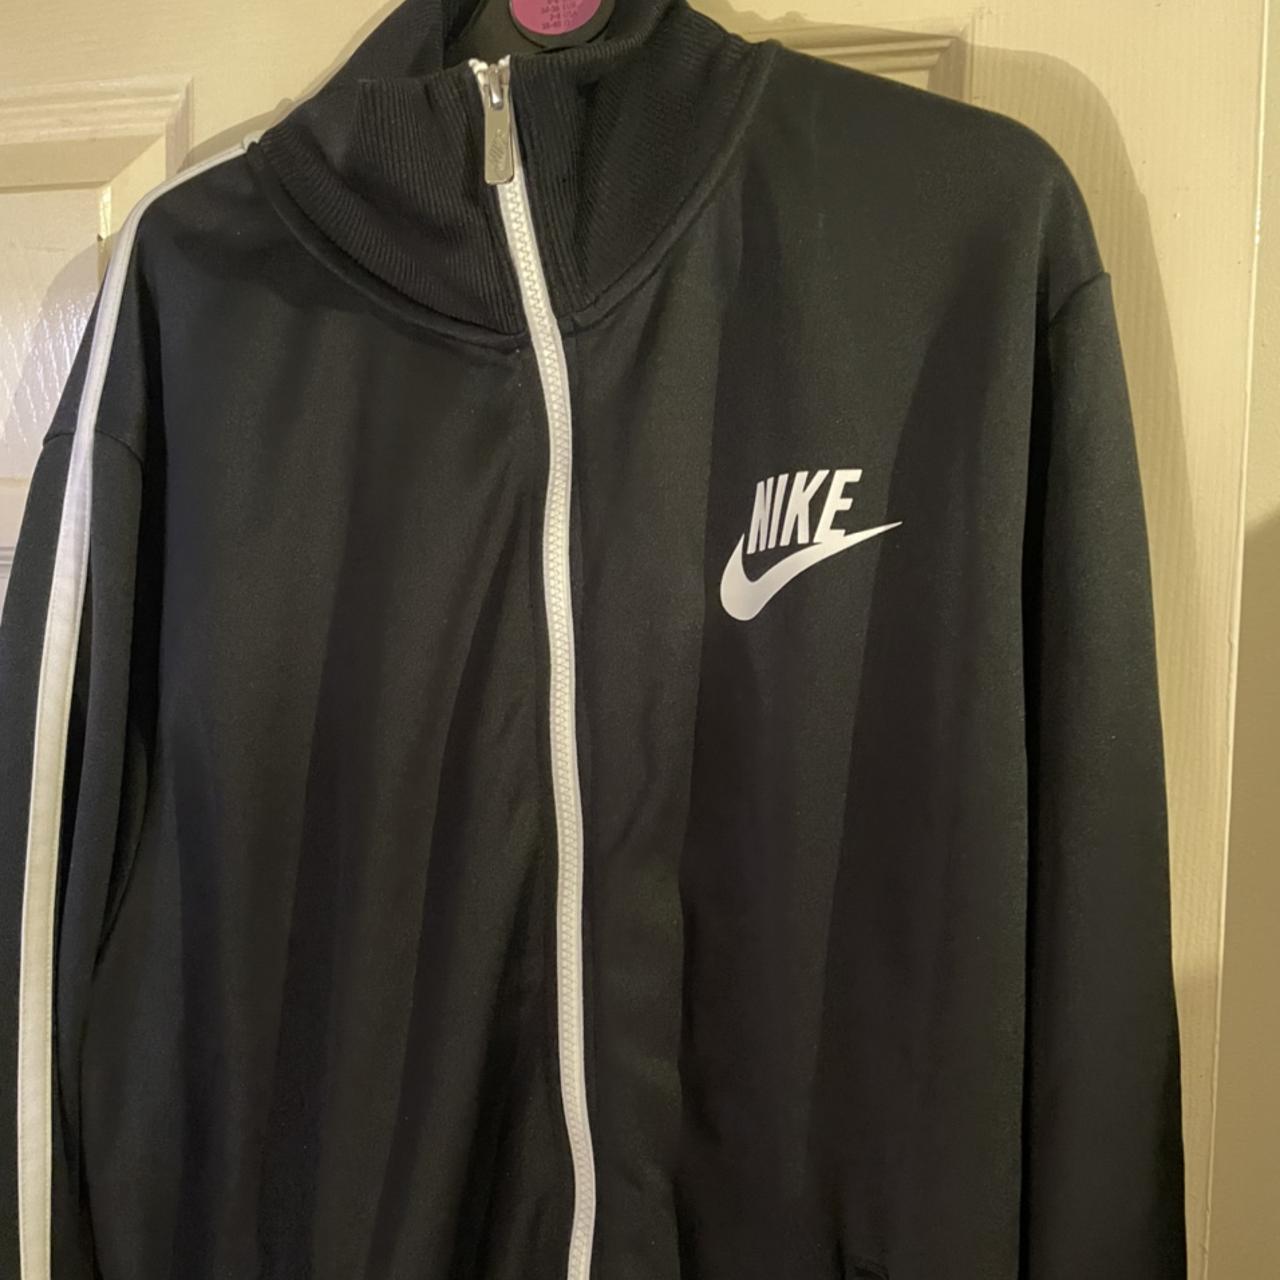 Nike track jacket slight bobbling on right side of... - Depop